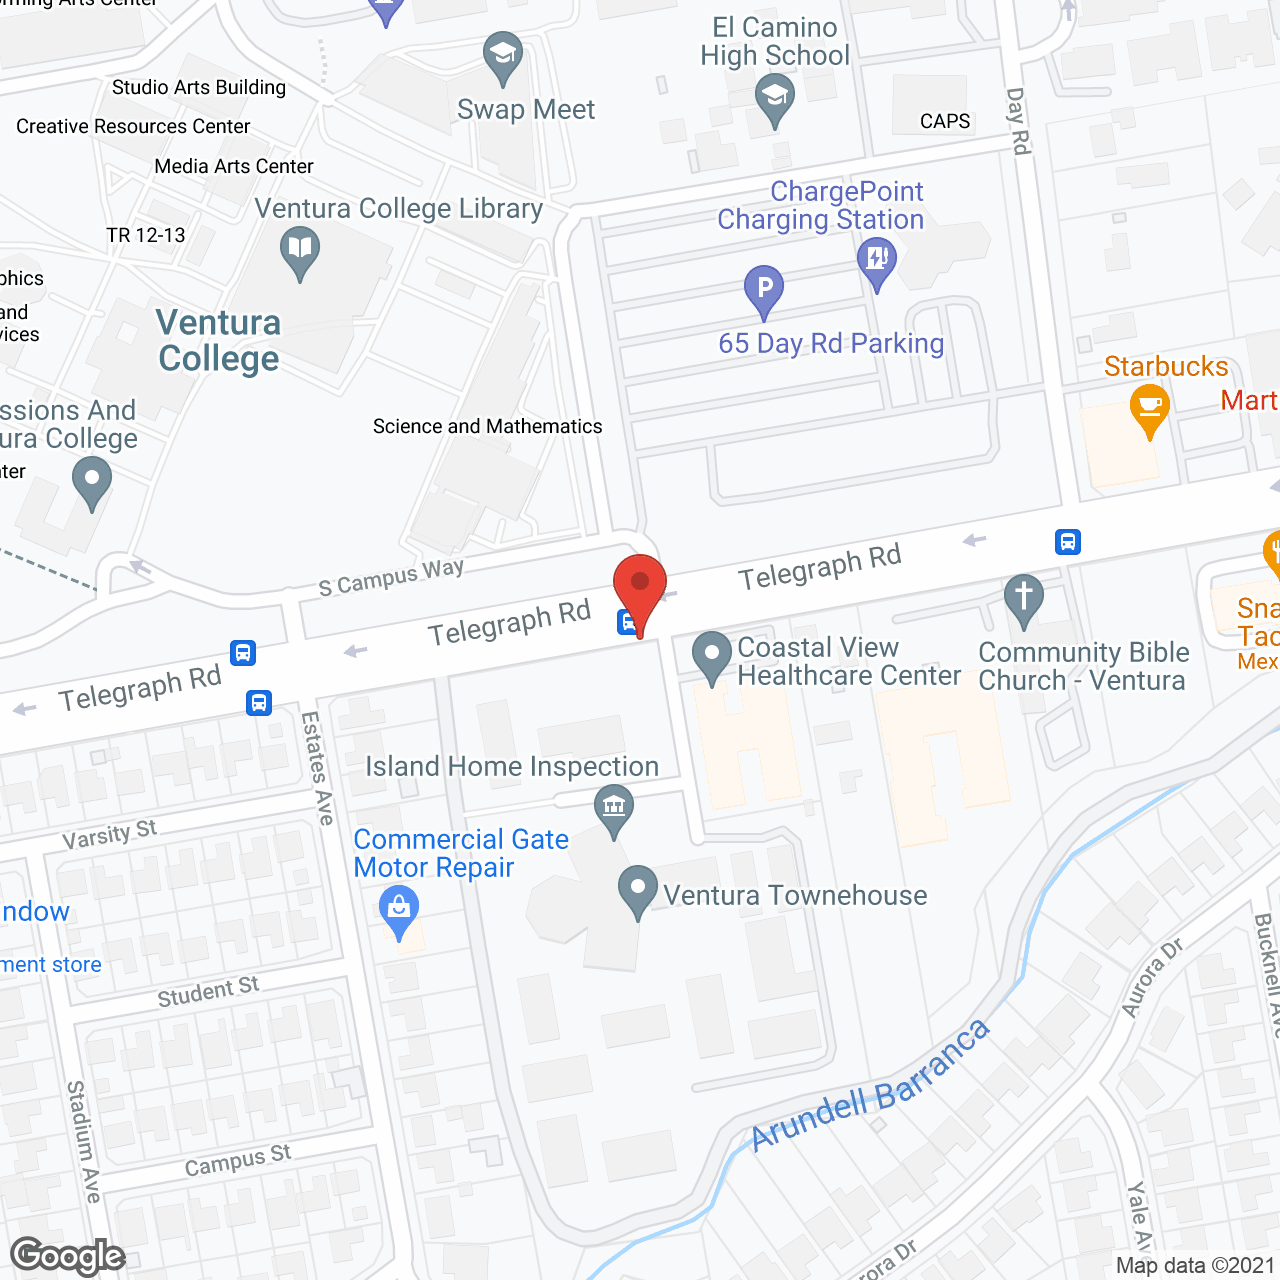 Ventura Townehouse in google map